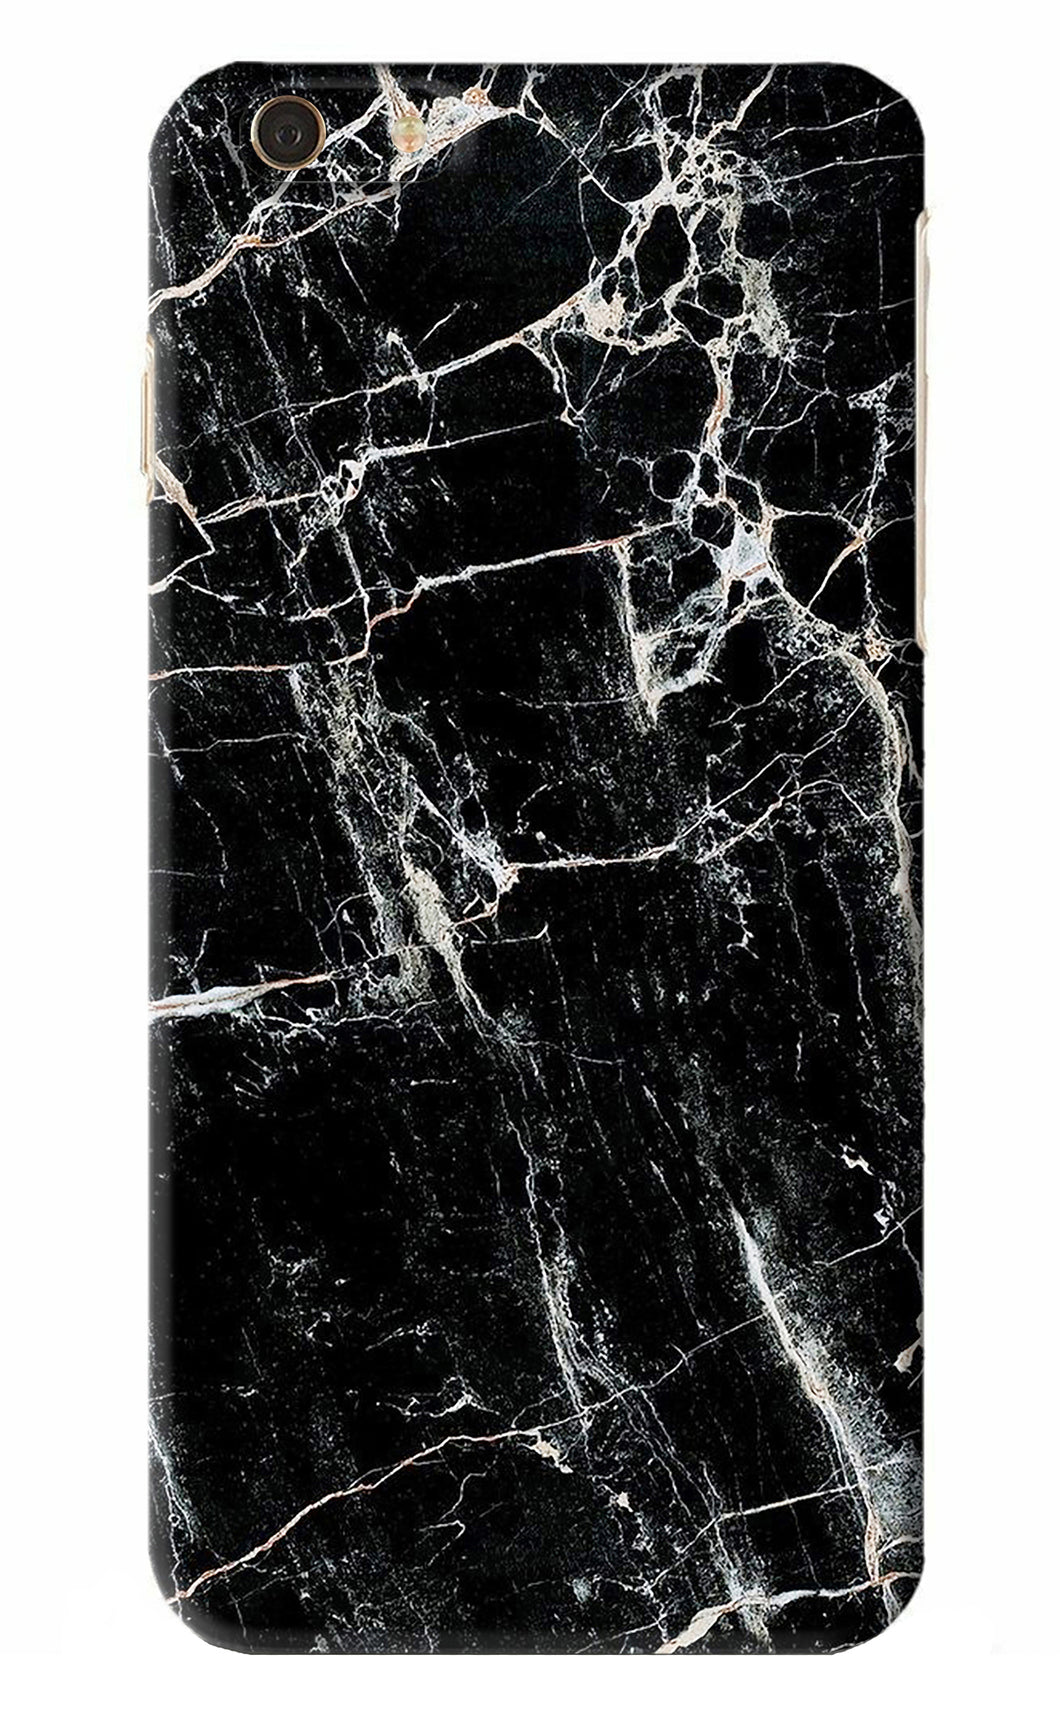 Black Marble Texture 1 iPhone 6 Plus Back Skin Wrap